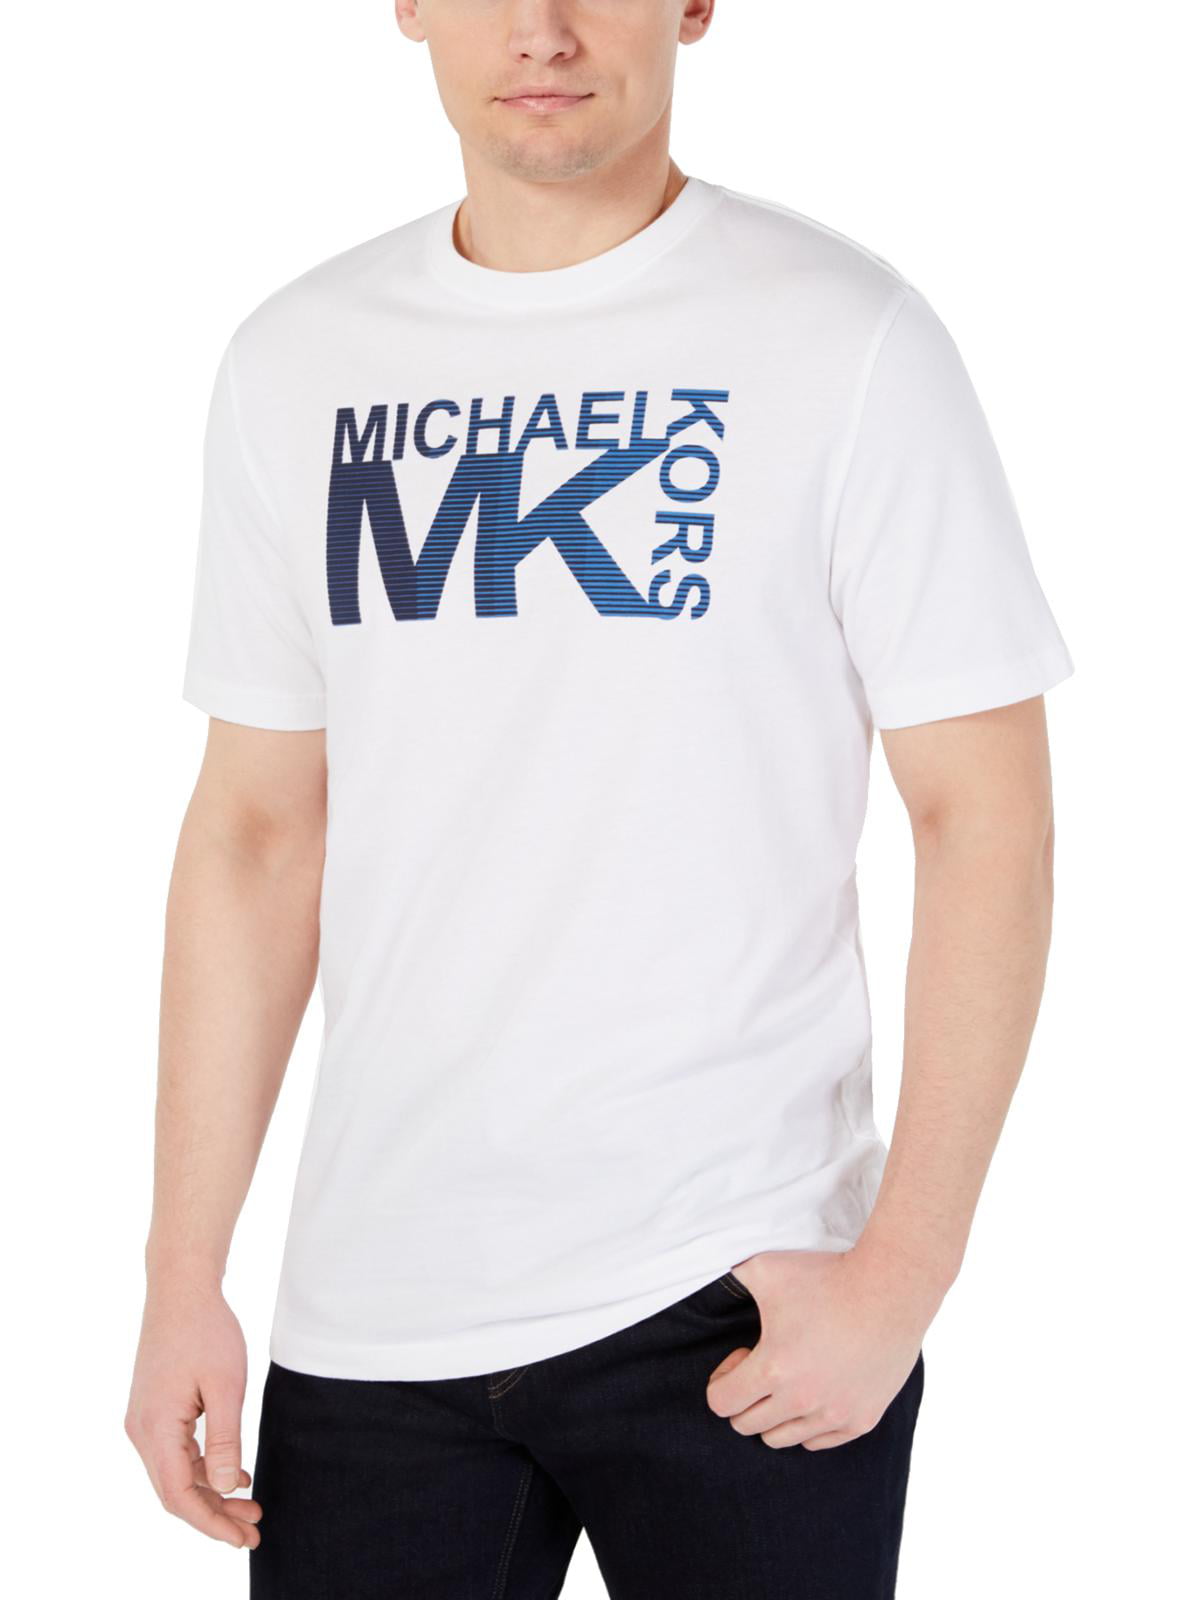 michael kors mens white t shirt